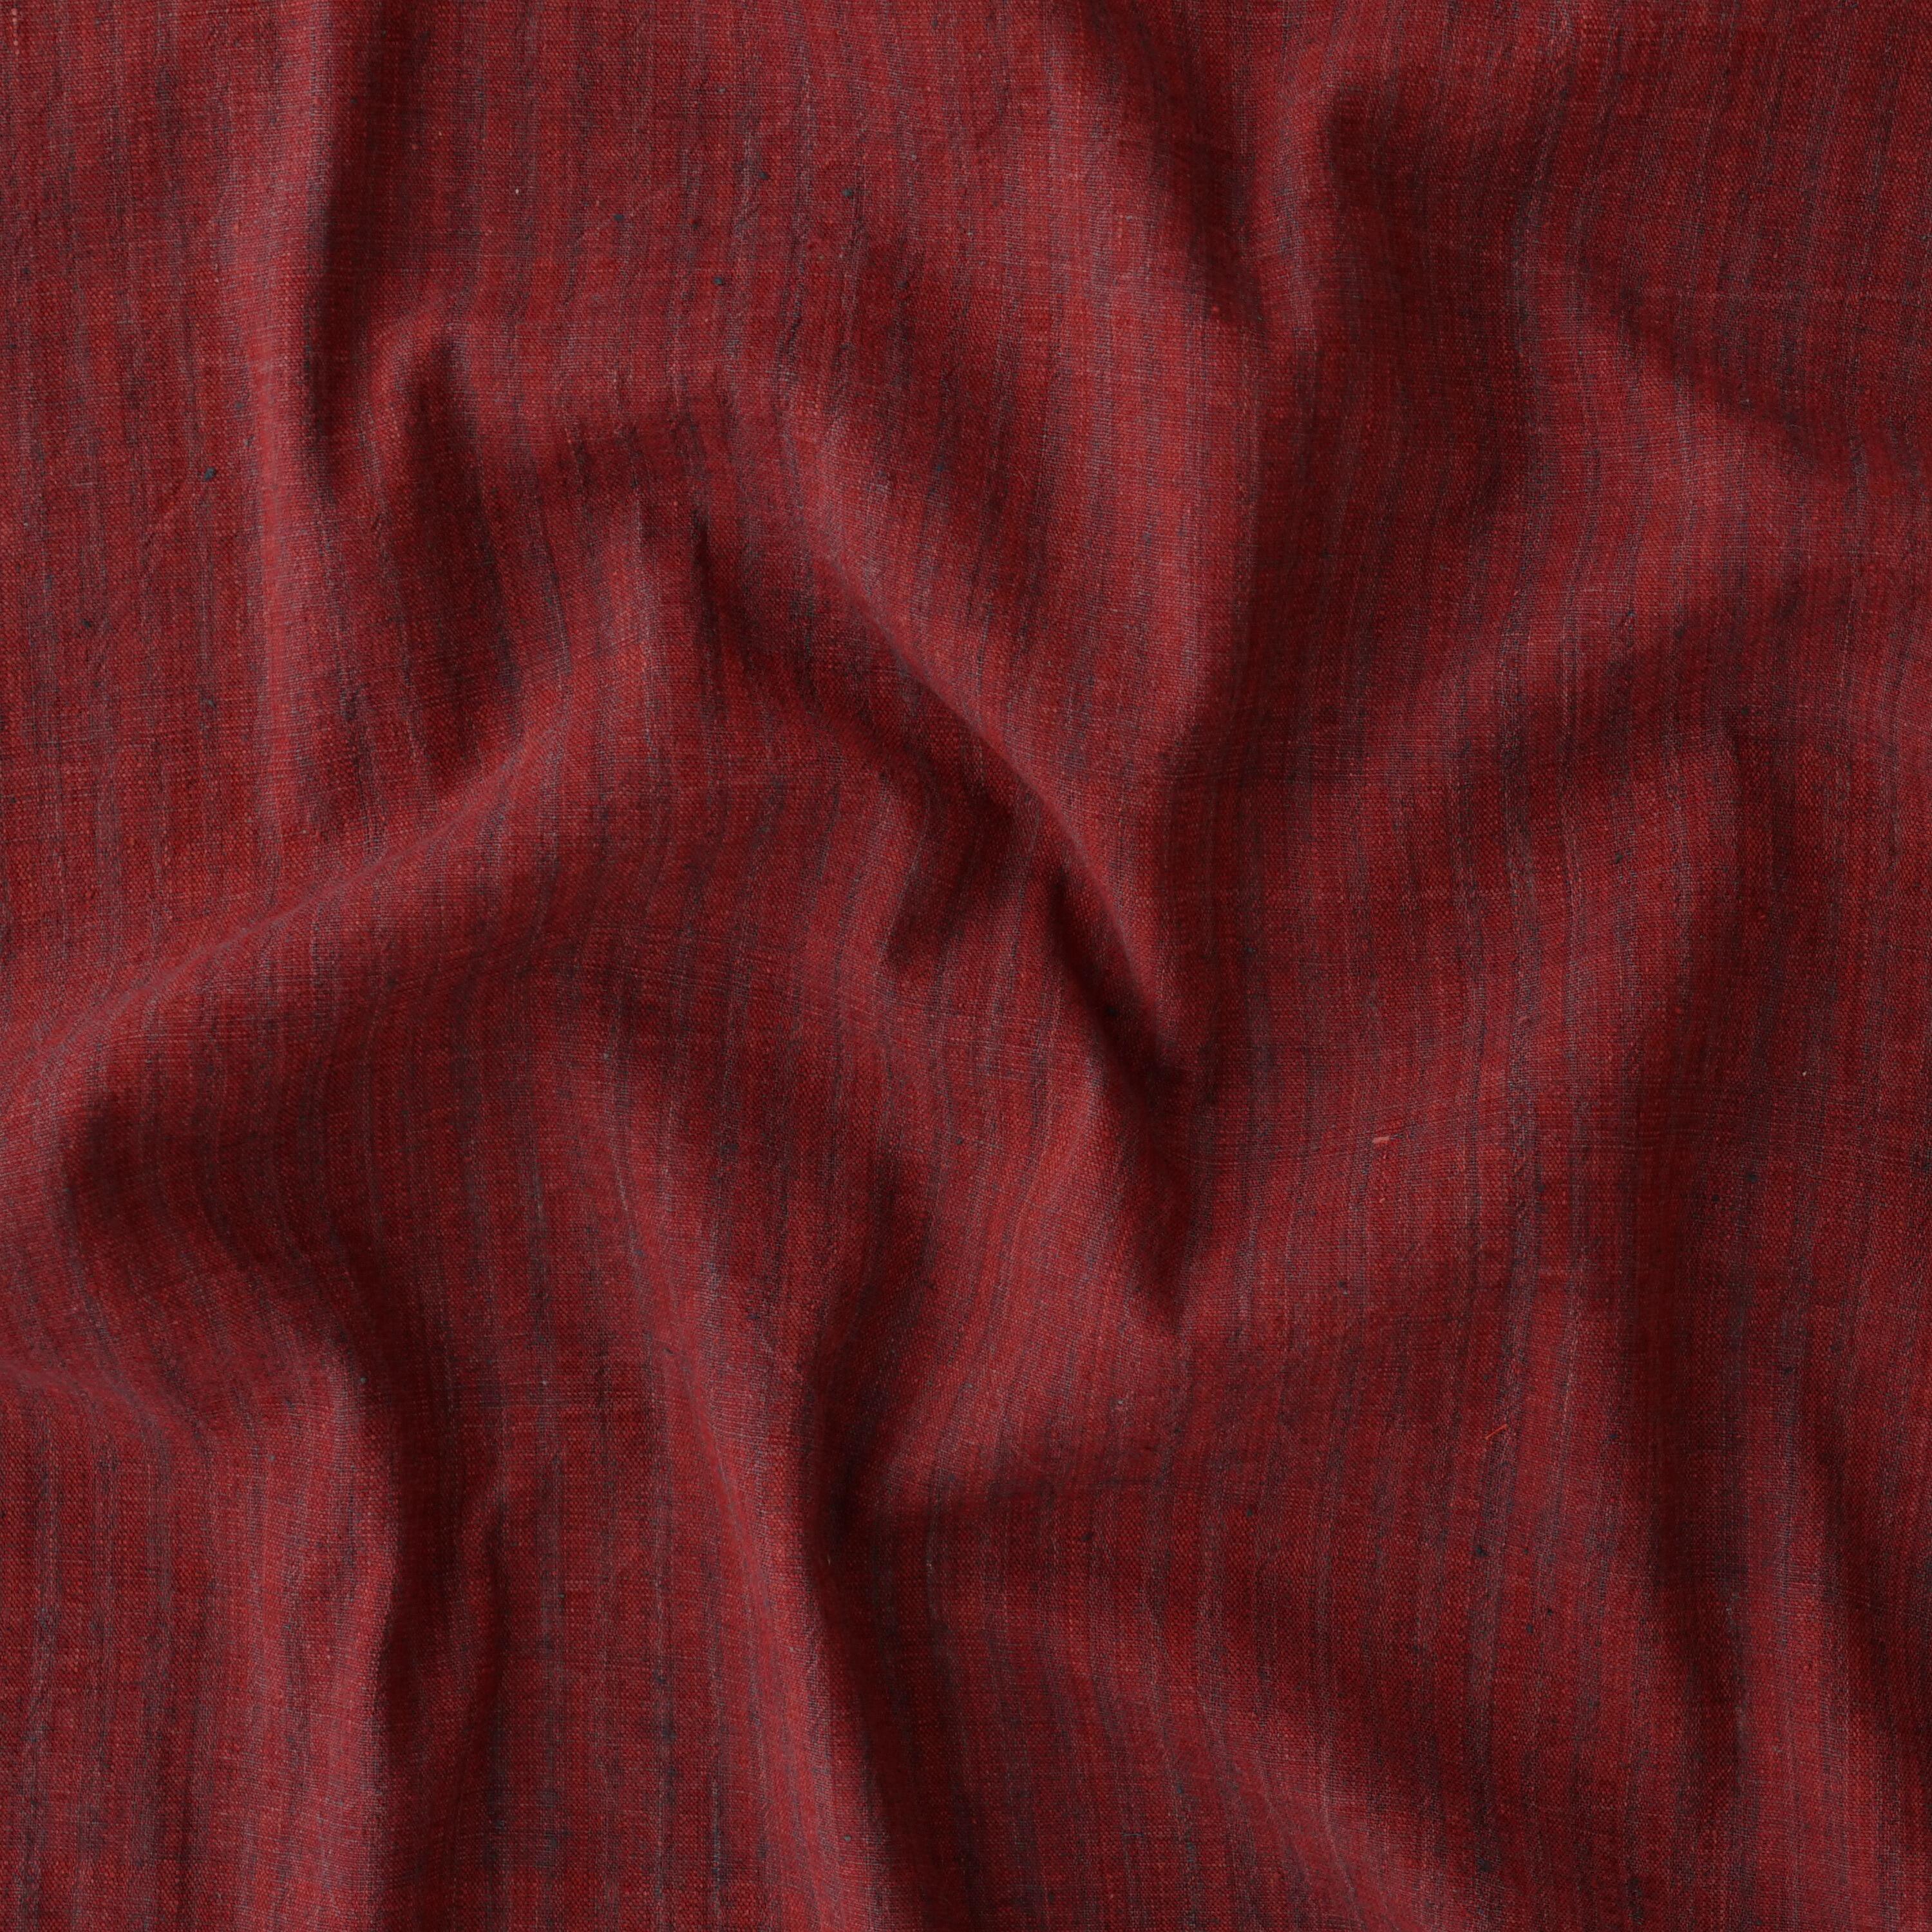 100% Handloom Woven Cotton - Dented Stripes - Red Alizarin Dented Warp, Natural Indigo Green Warp - Contrast